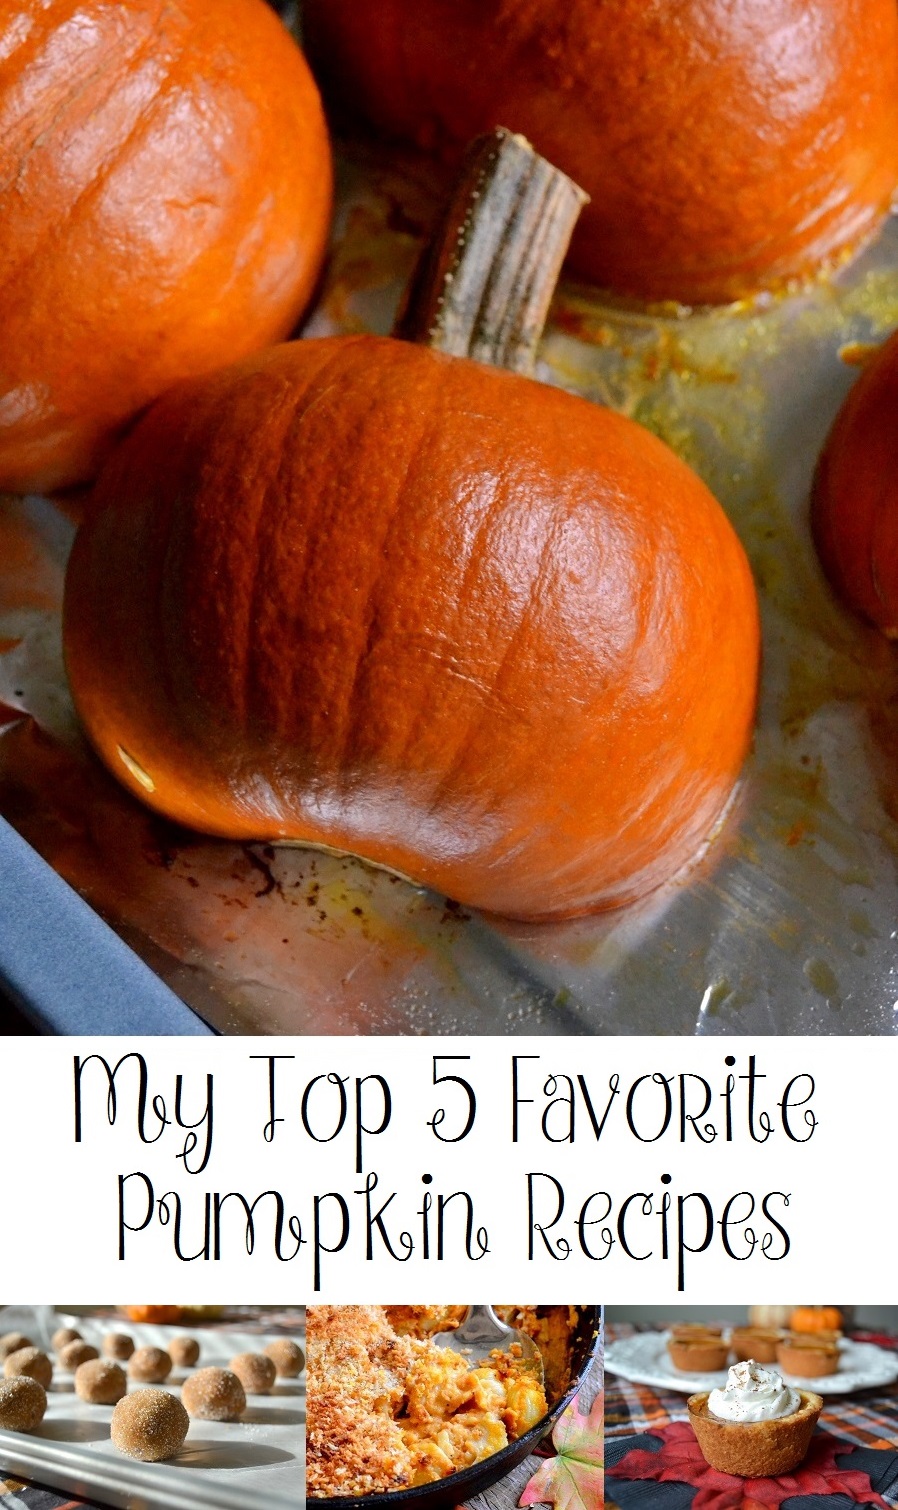 My Top 5 Favorite Pumpkin Recipes